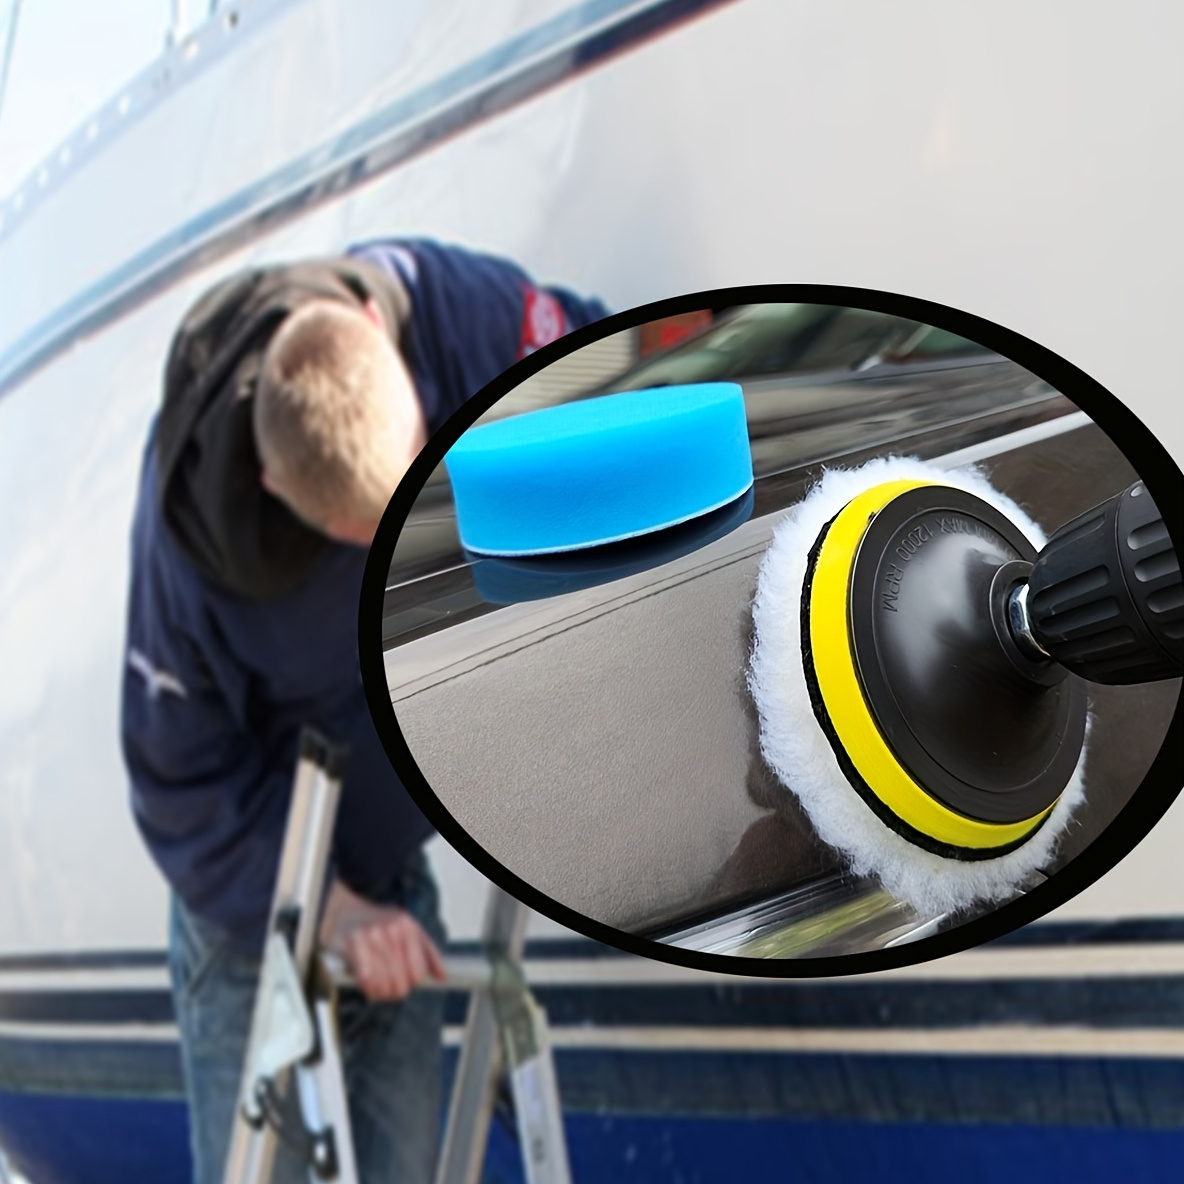 

4pcs Car & Boat Polishing Waxing Tools Set - Cleaning Sponges For A Shiny Finish!